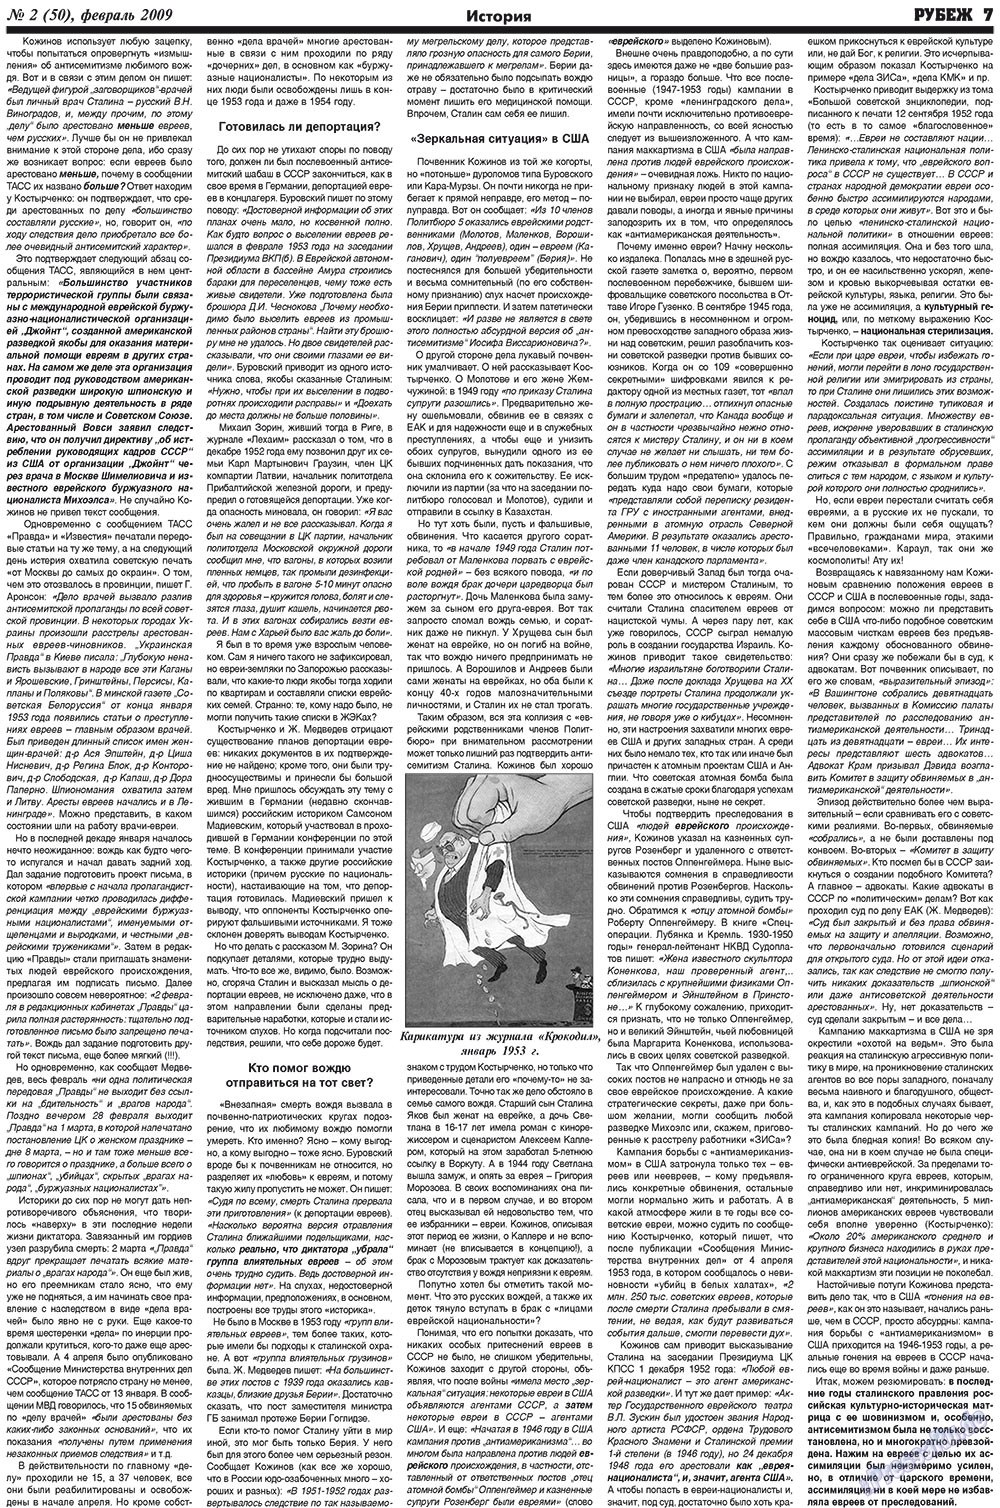 Рубеж, газета. 2009 №2 стр.7